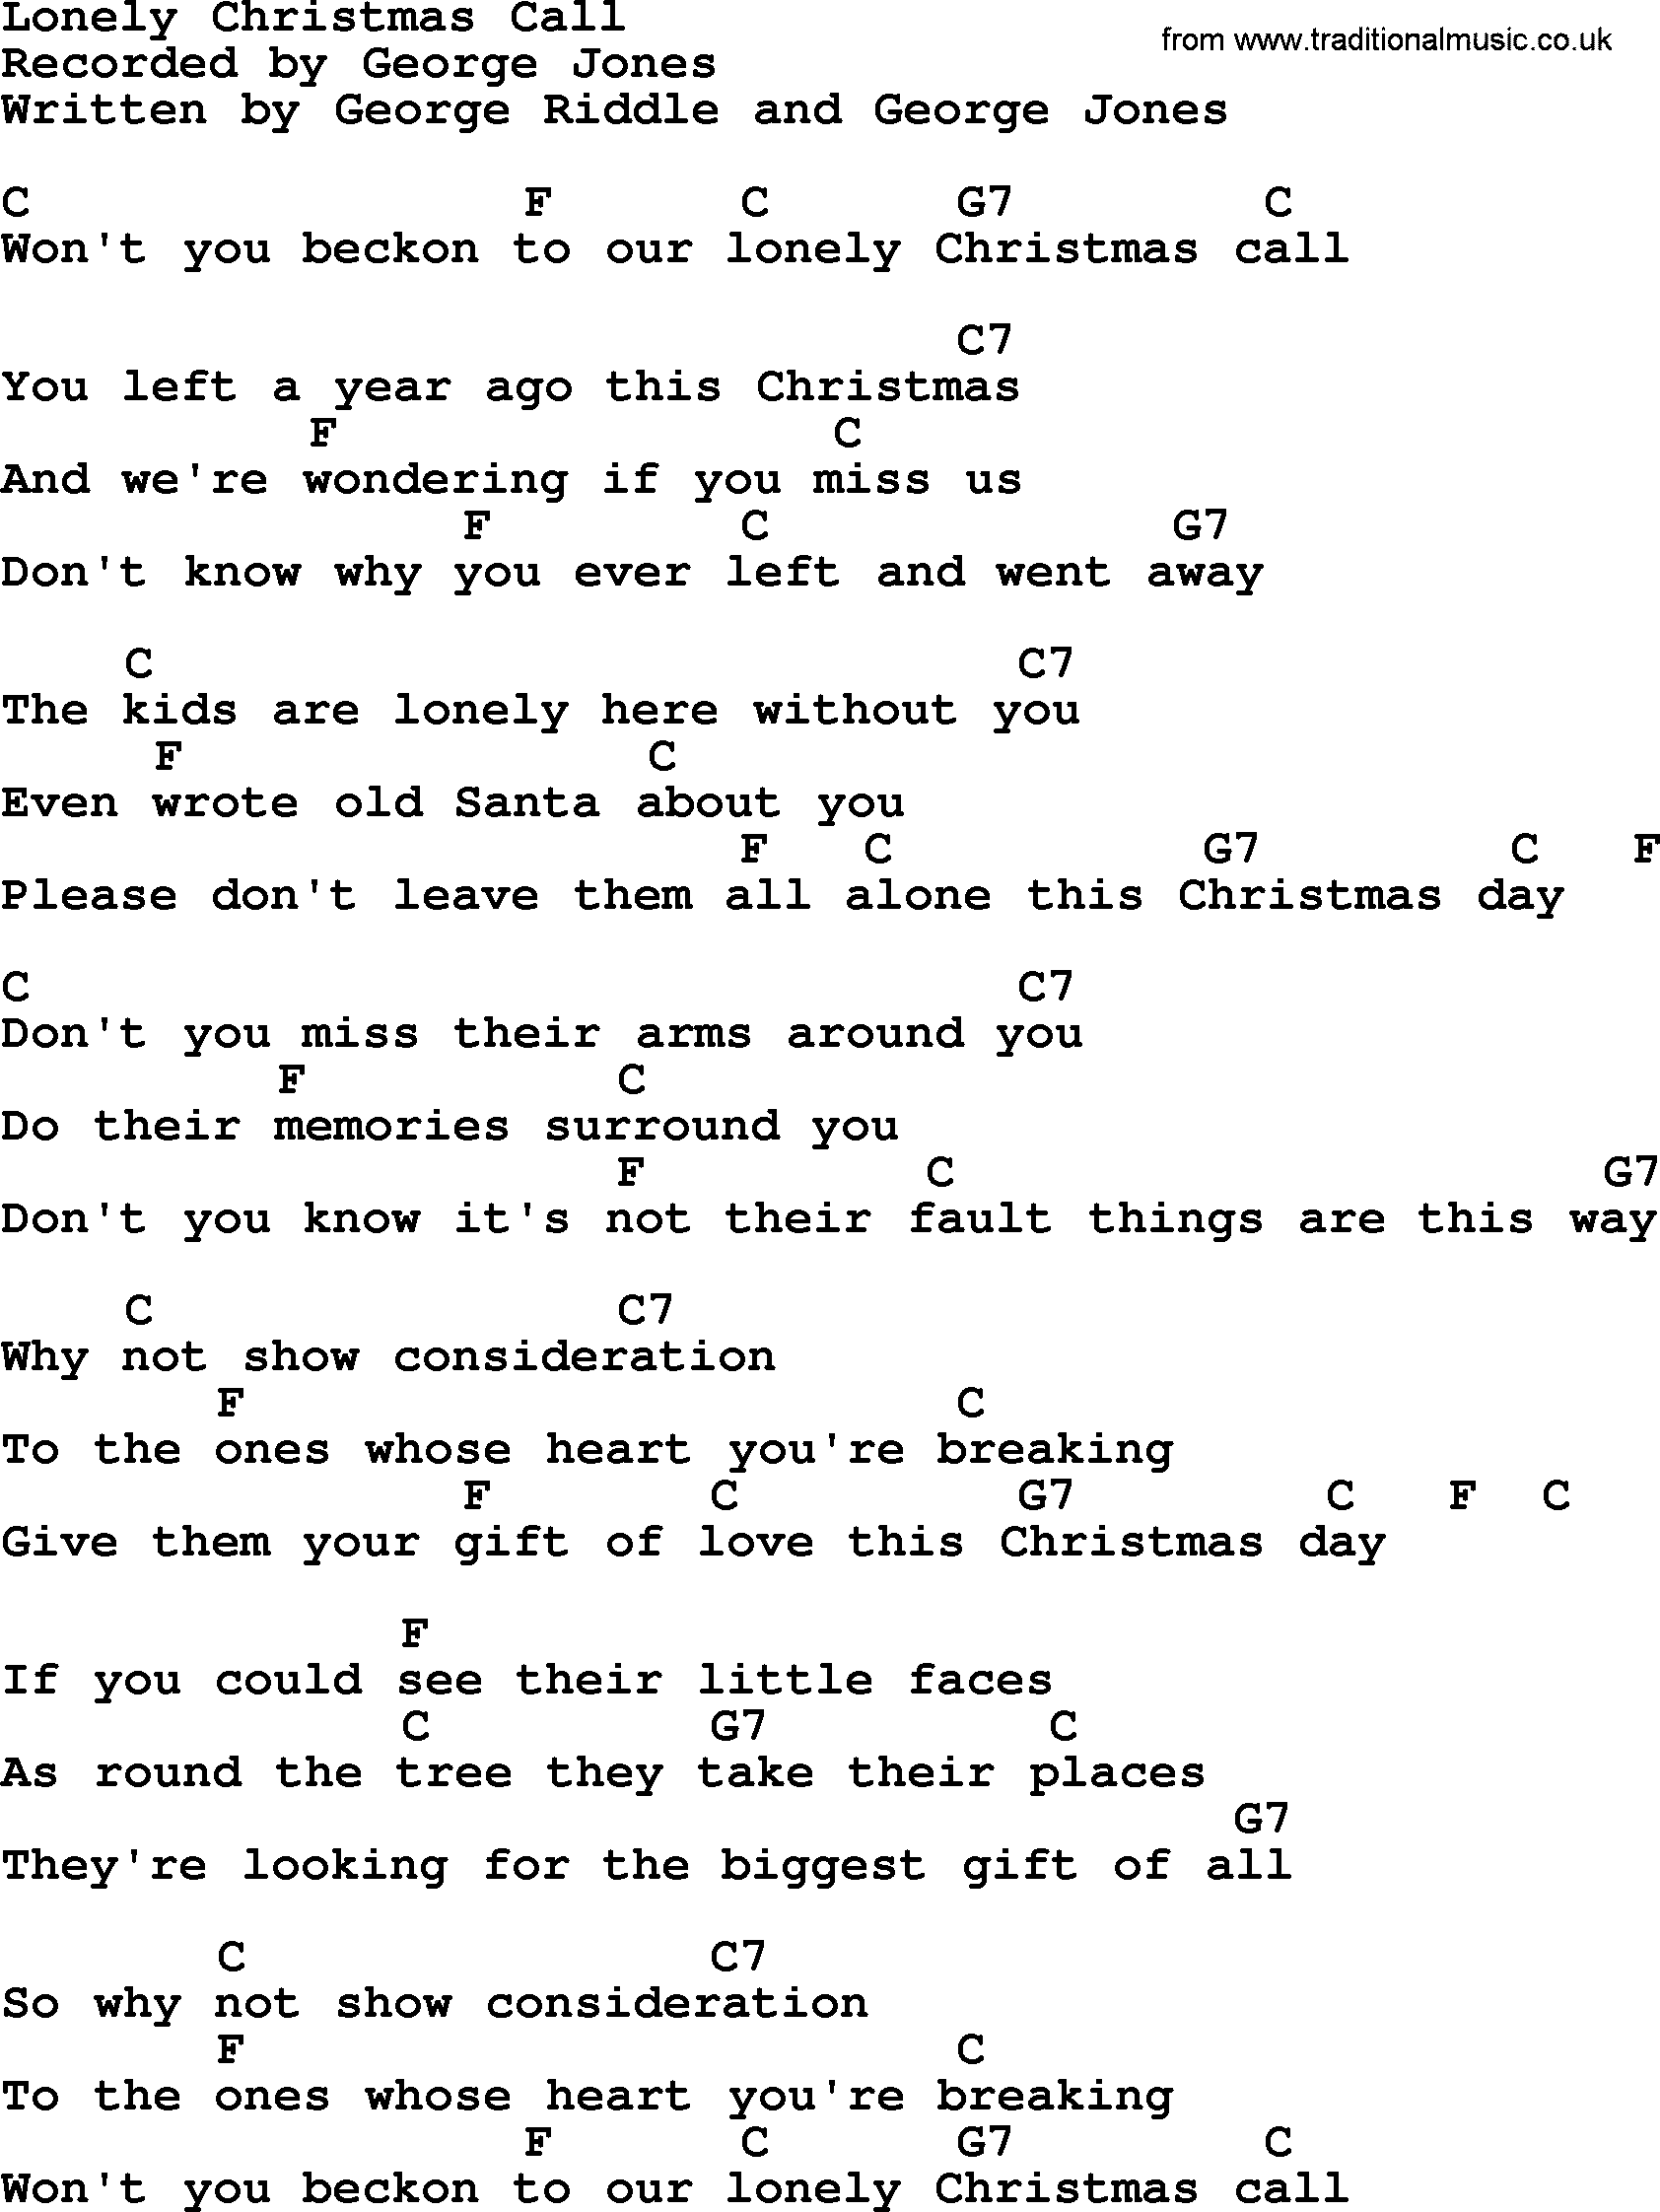 Lonely christmas lyrics